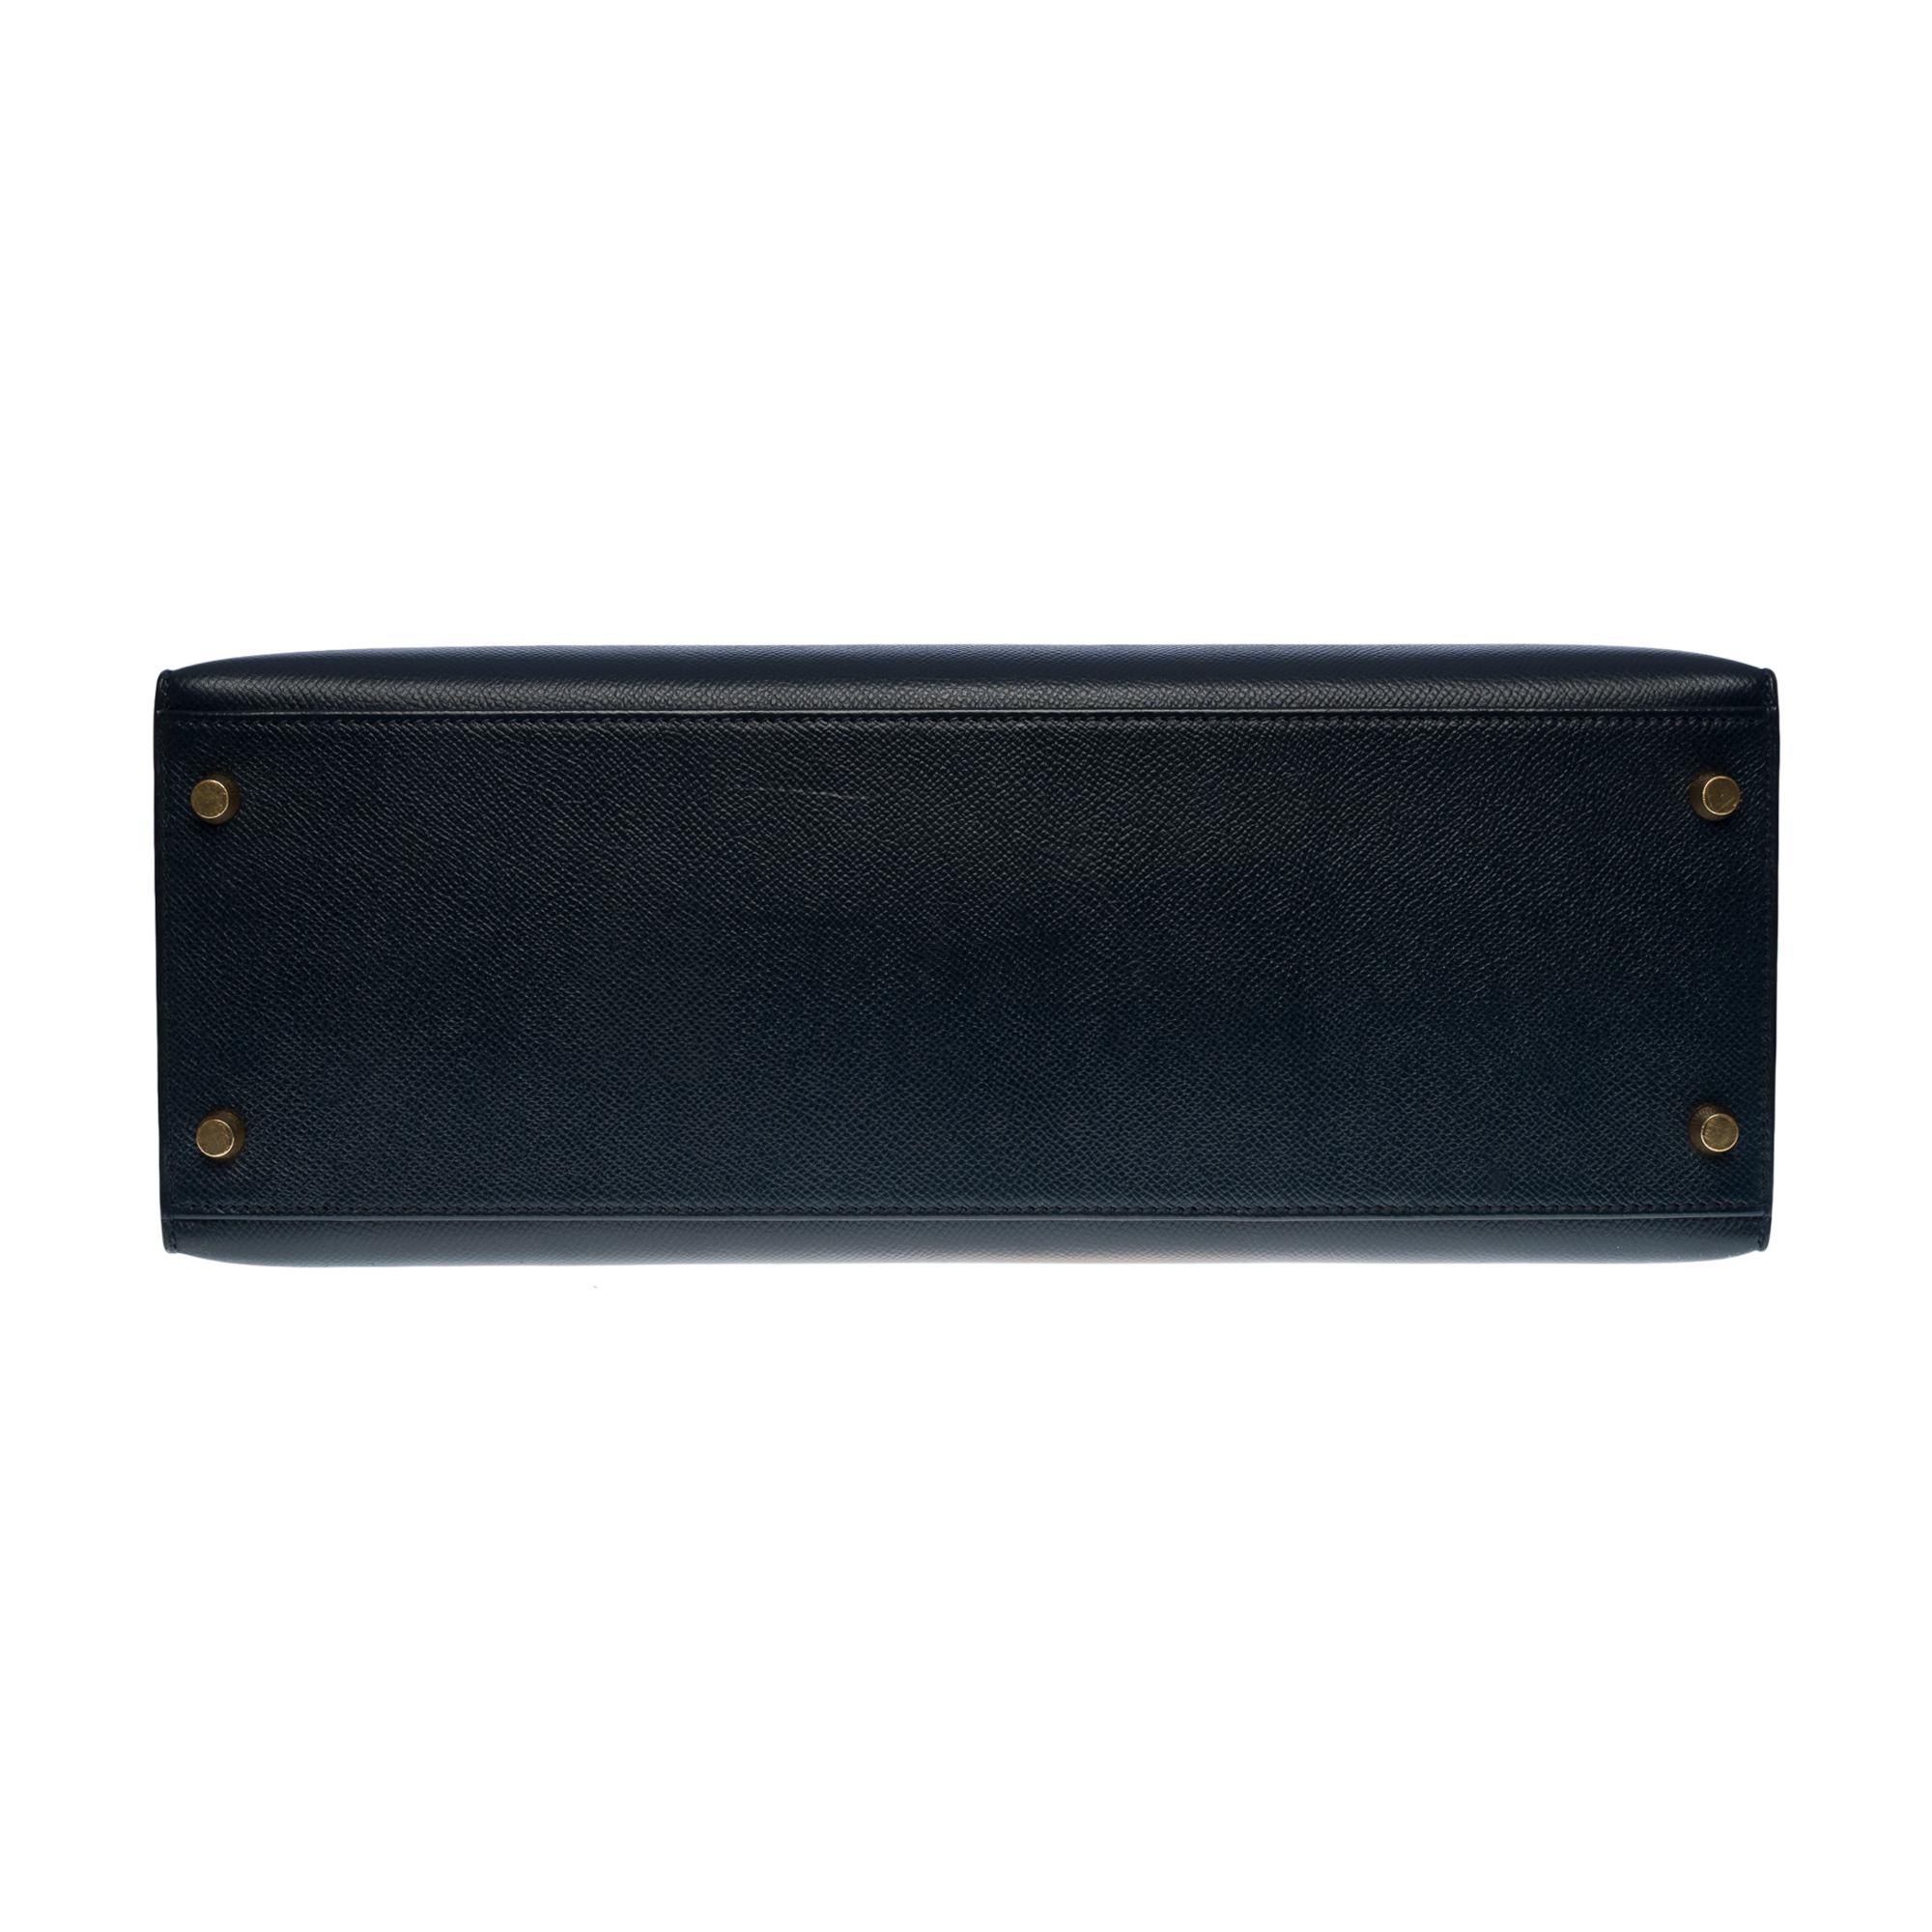 Hermès Kelly 35 sellier handbag strap in Courchevel bleu nuit leather, GHW 2